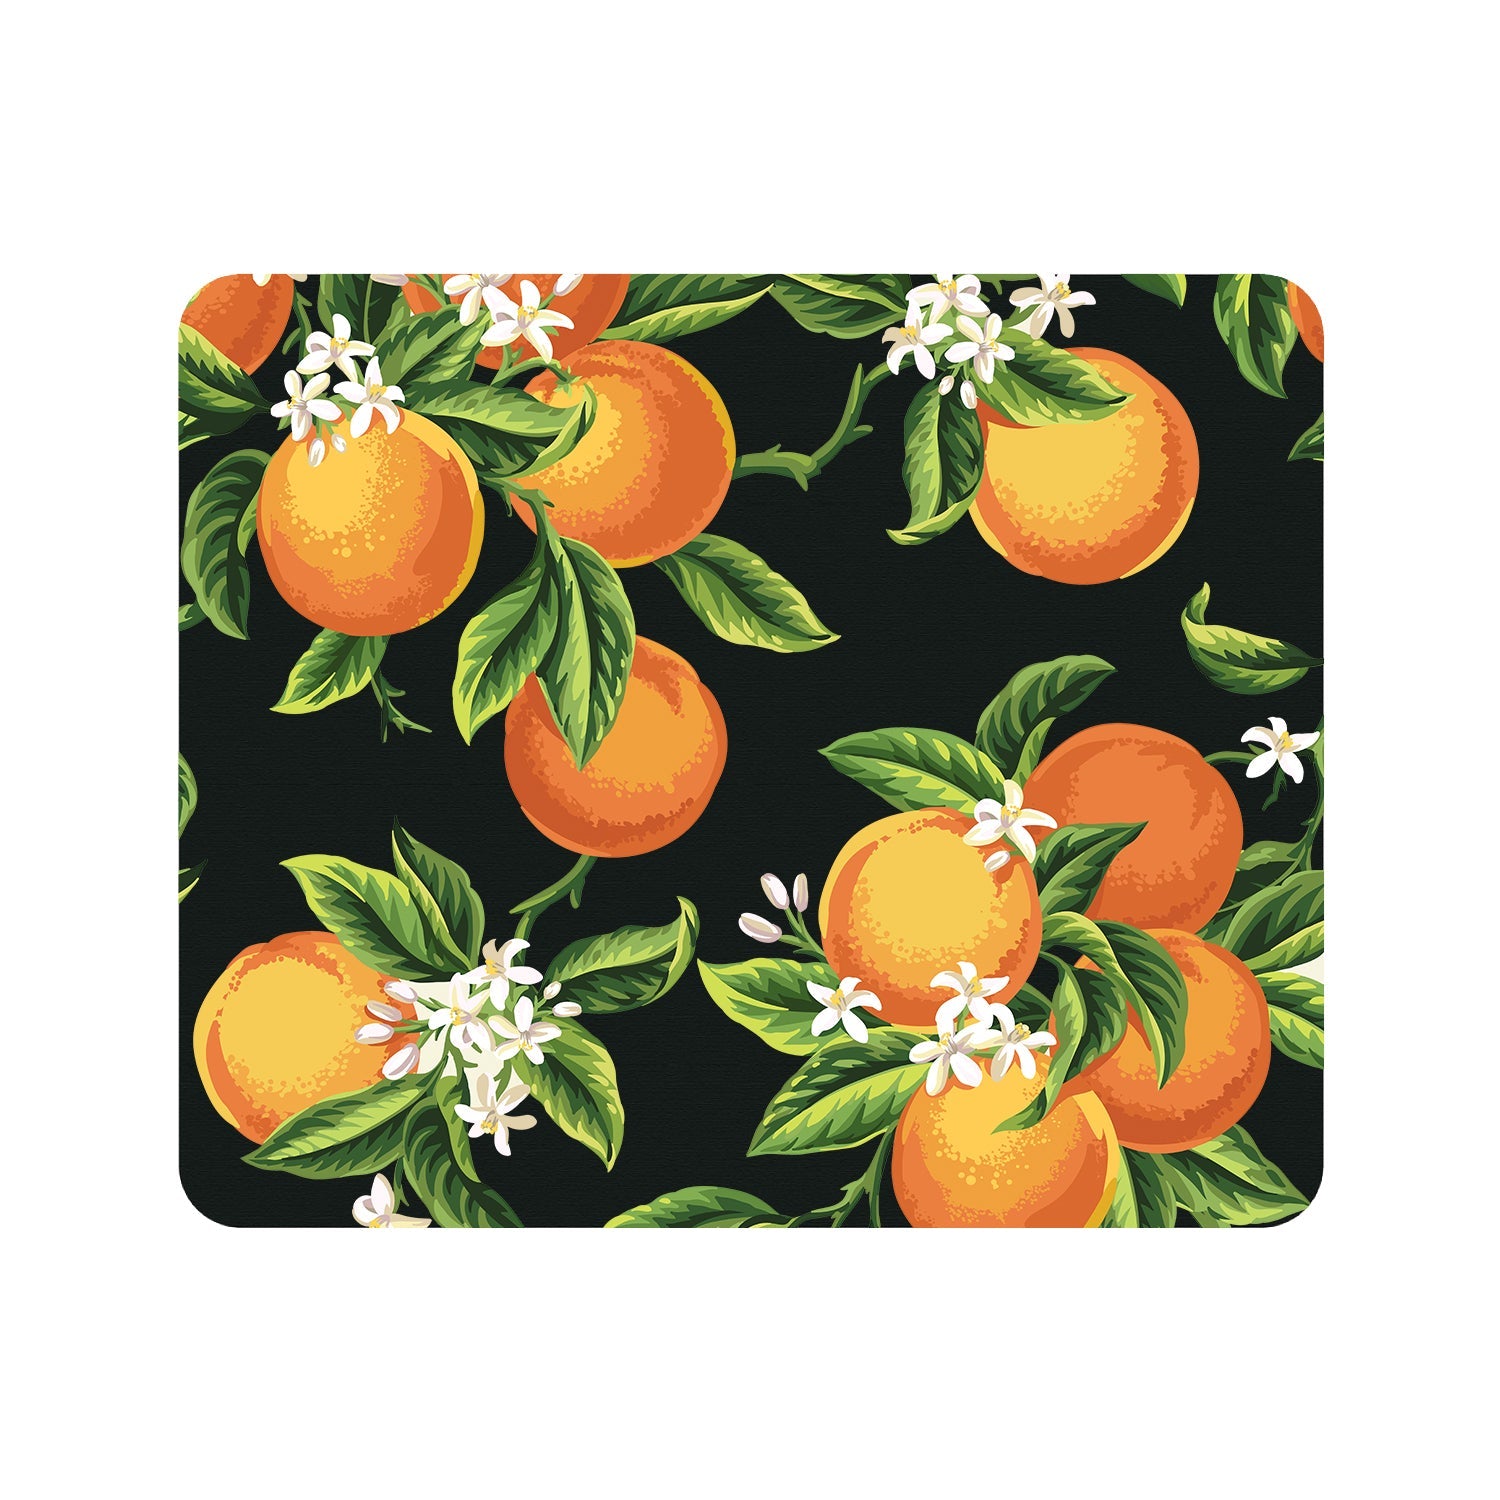 OTM Essentials Prints Series Mouse Pad, Oranges